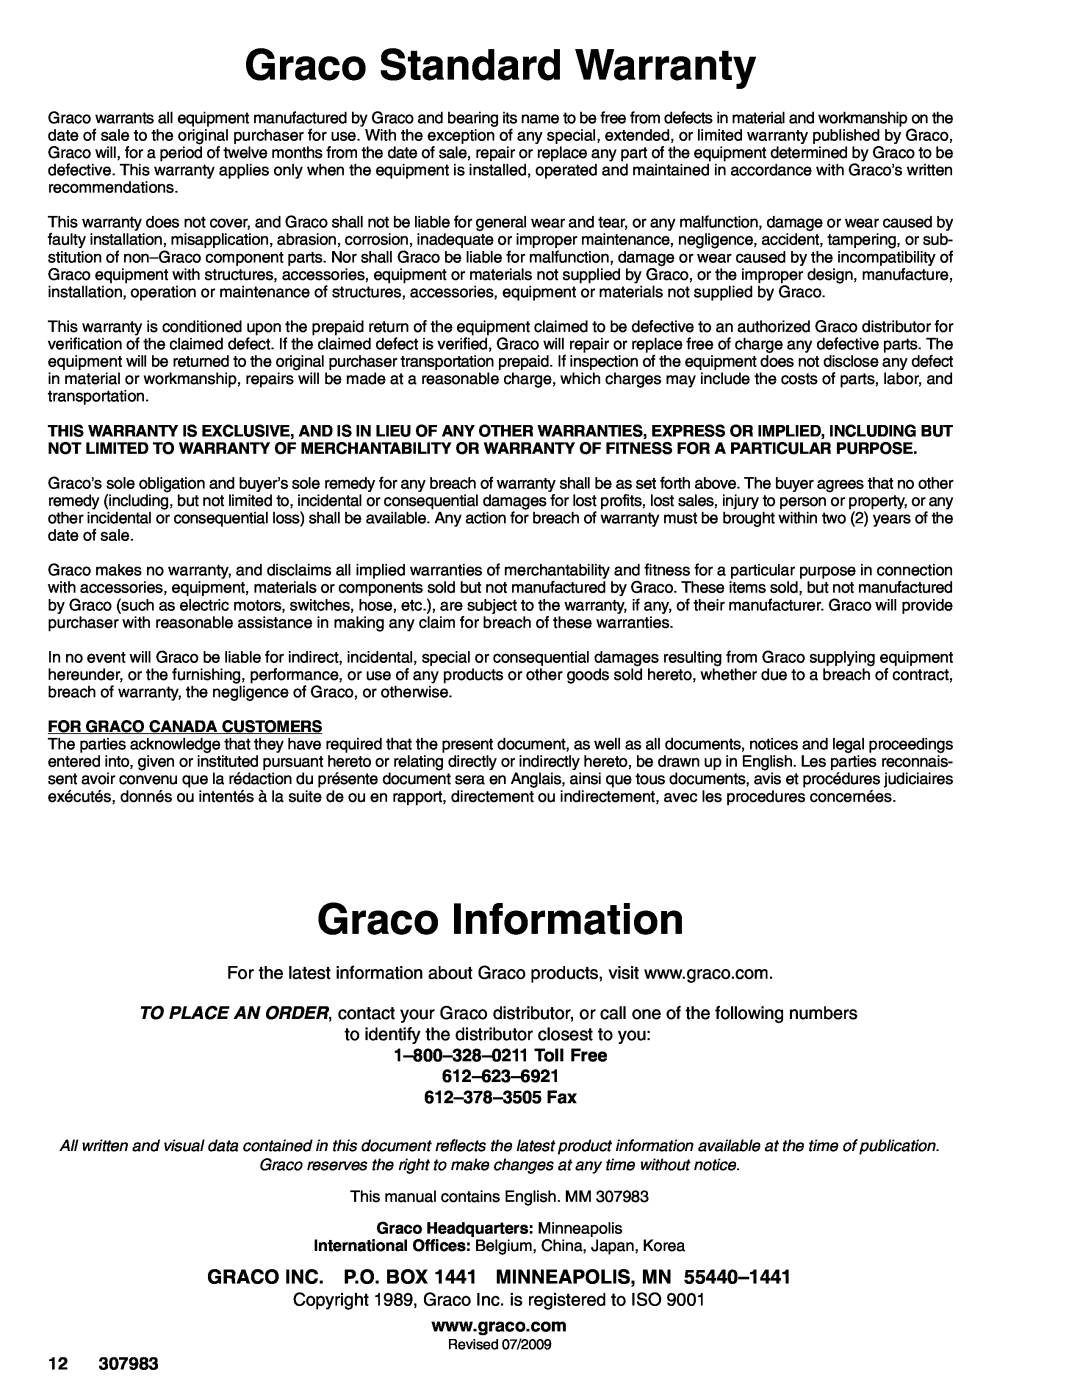 Graco Series D Graco Standard Warranty, Graco Information, For Graco Canada Customers, Graco Headquarters Minneapolis 